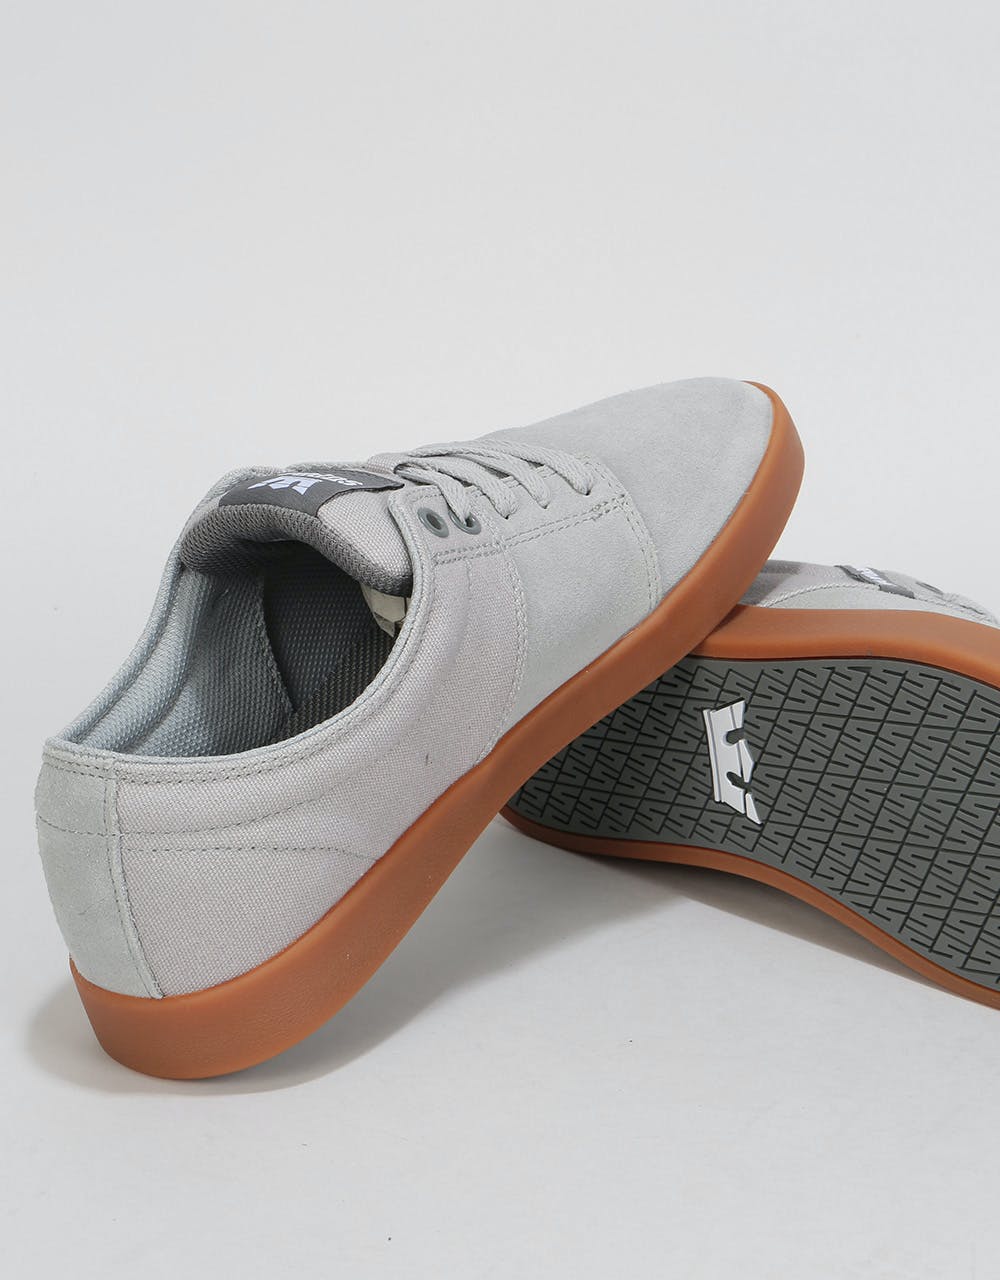 Supra Stacks II Skate Shoes - Light Grey/Grey/Gum